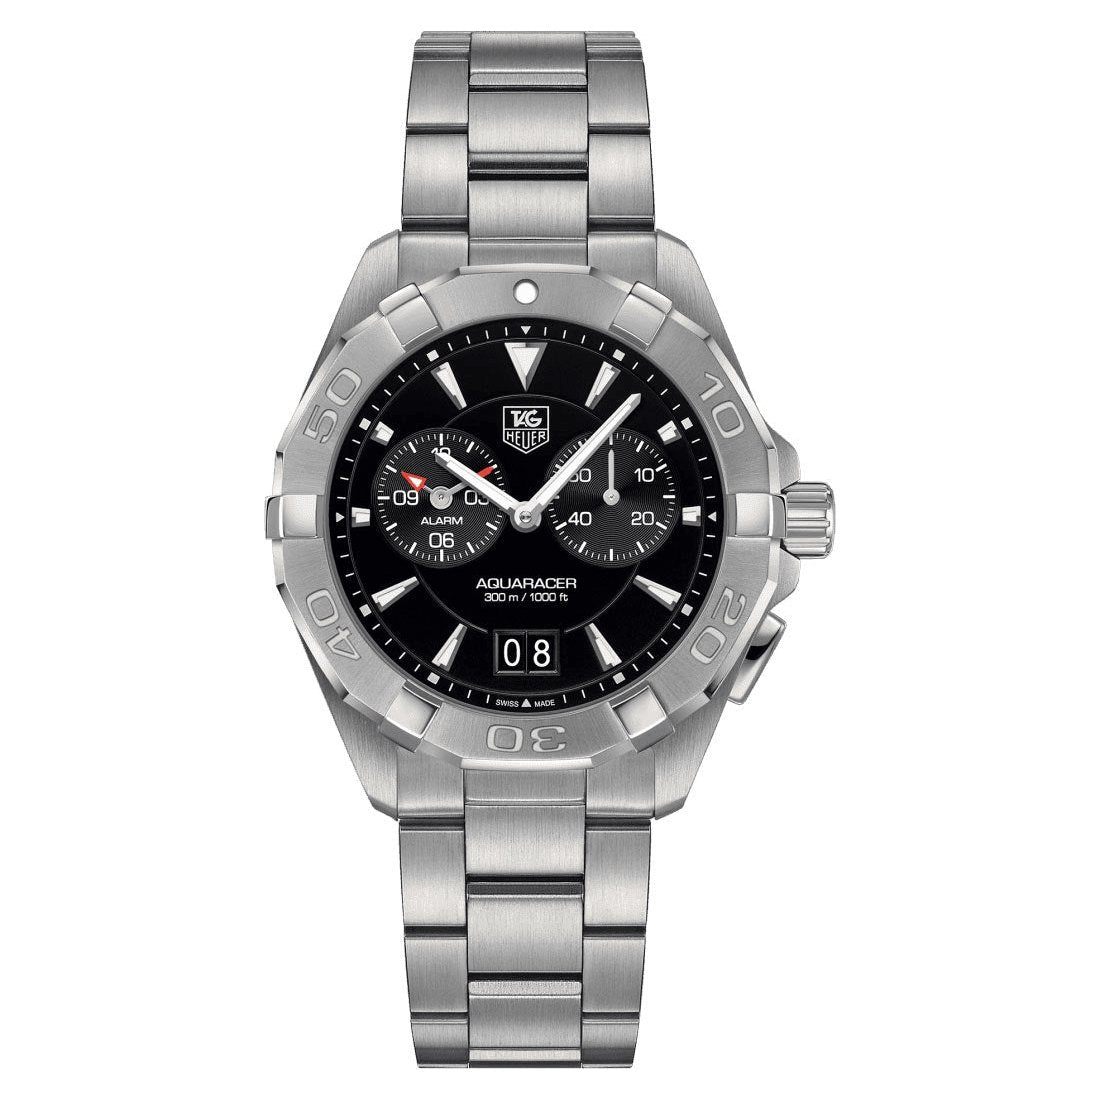 Tag Heuer Men's Aquaracer Alarm Watch WAY111Z.BA0928 - Watches & Crystals